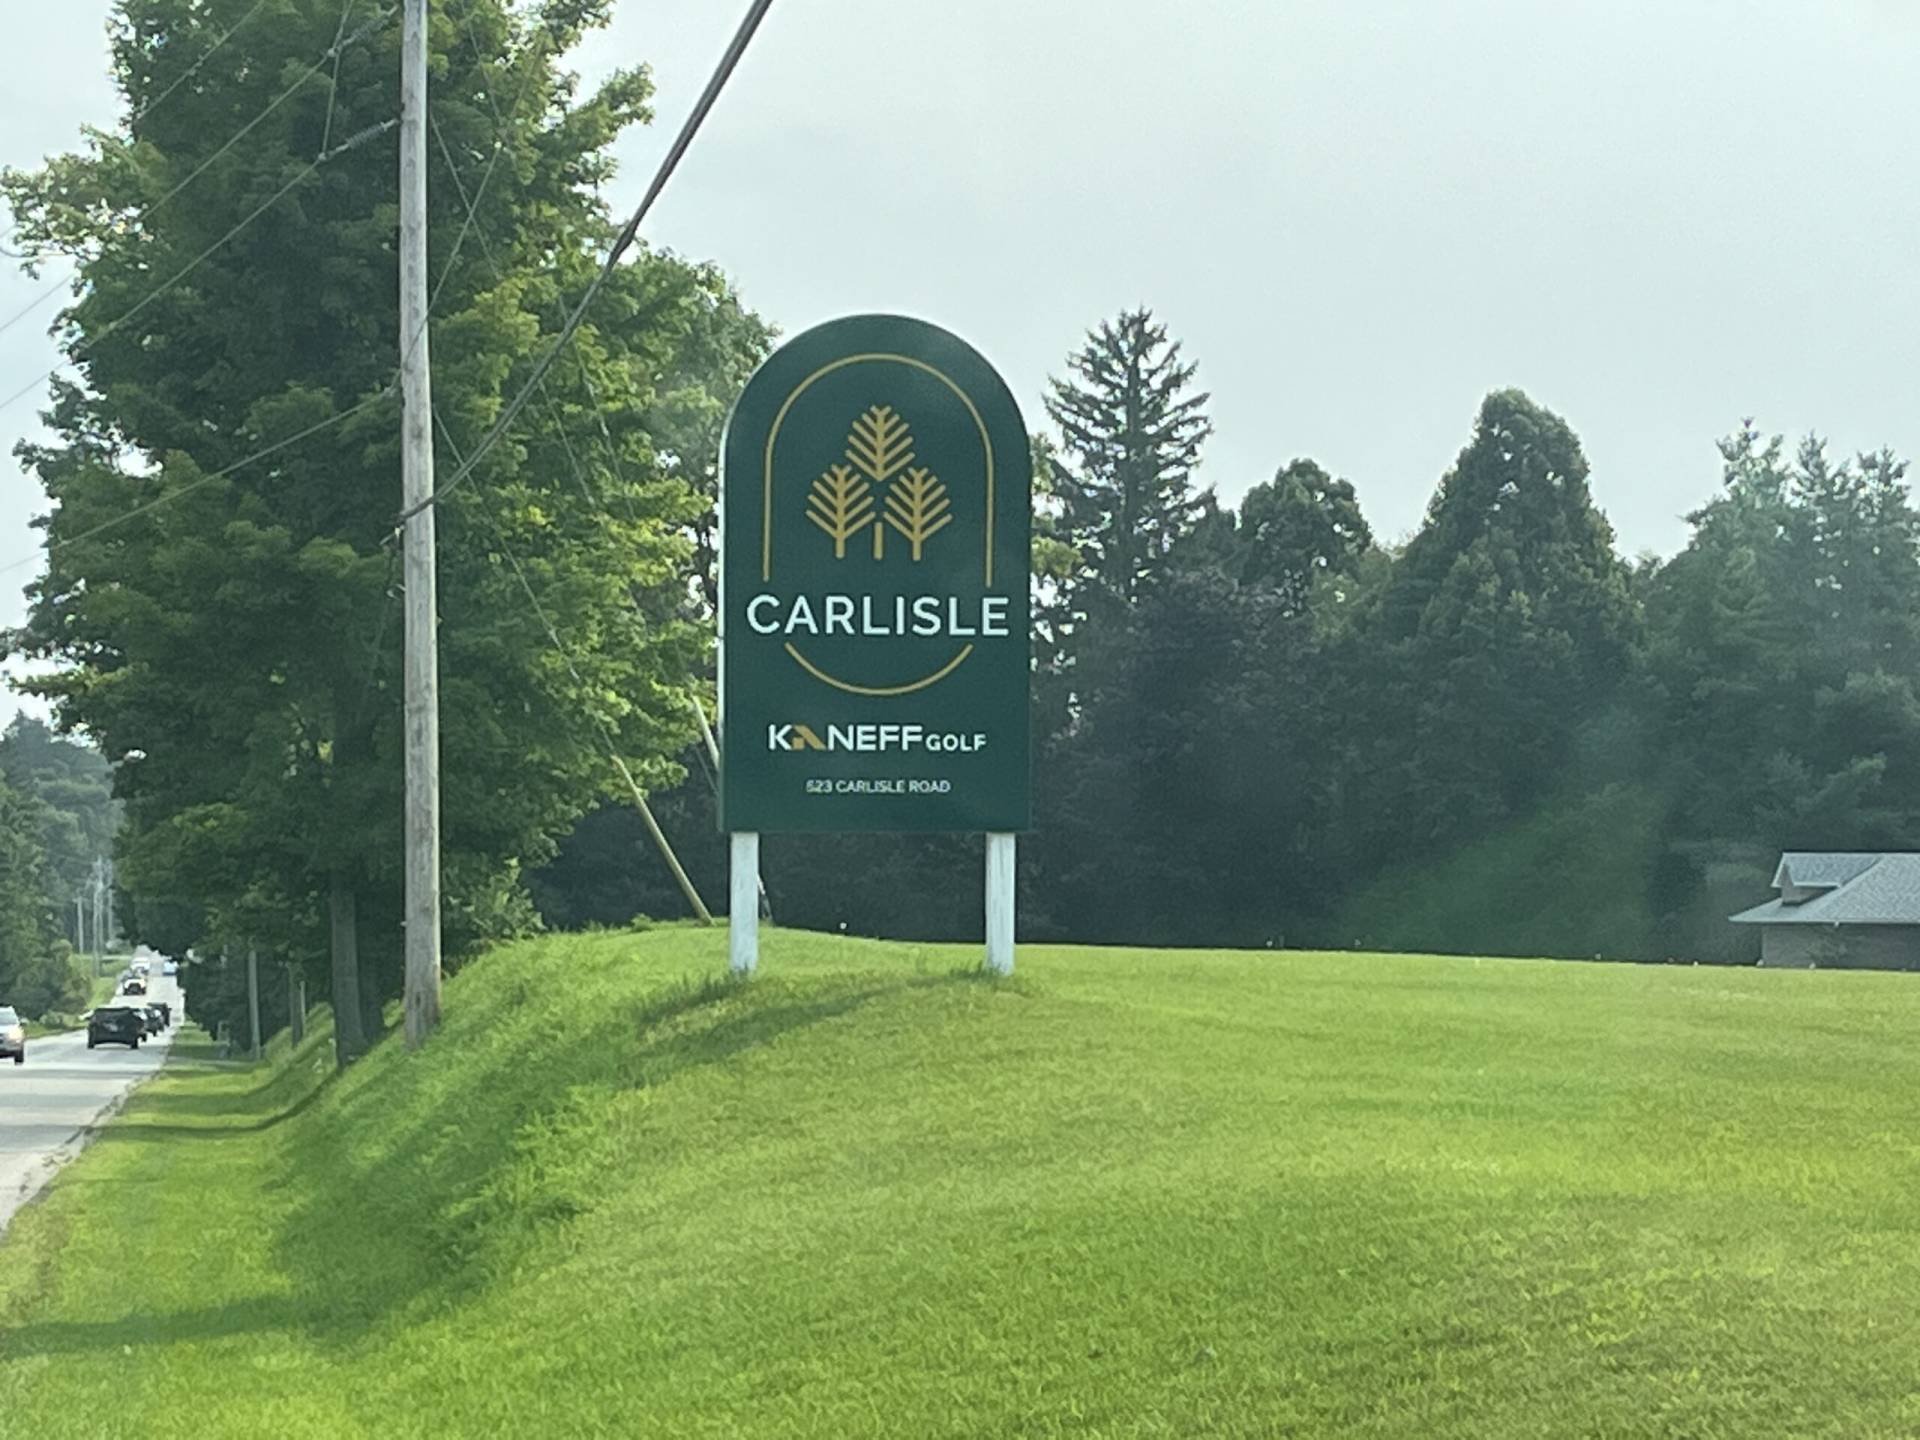 Carlisle, Hamilton golf park sign board